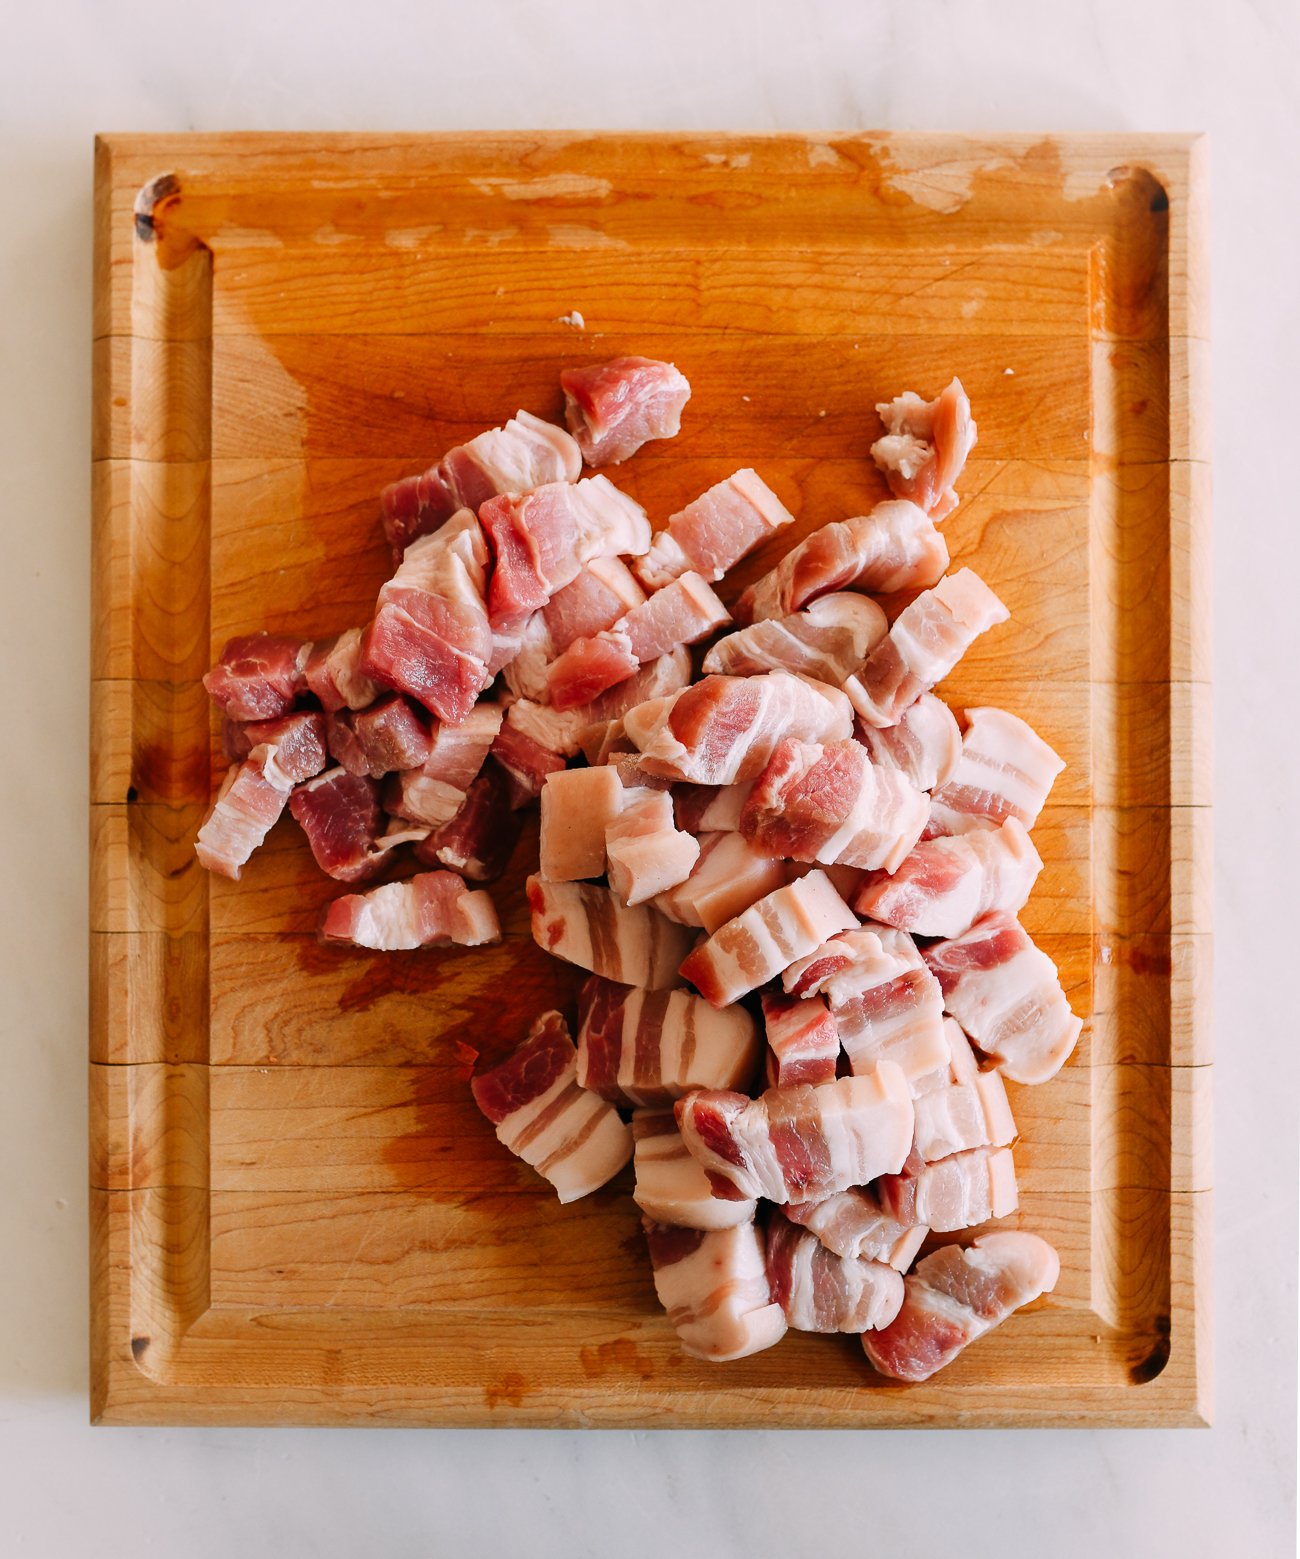 pork belly cut into pieces on cutting board